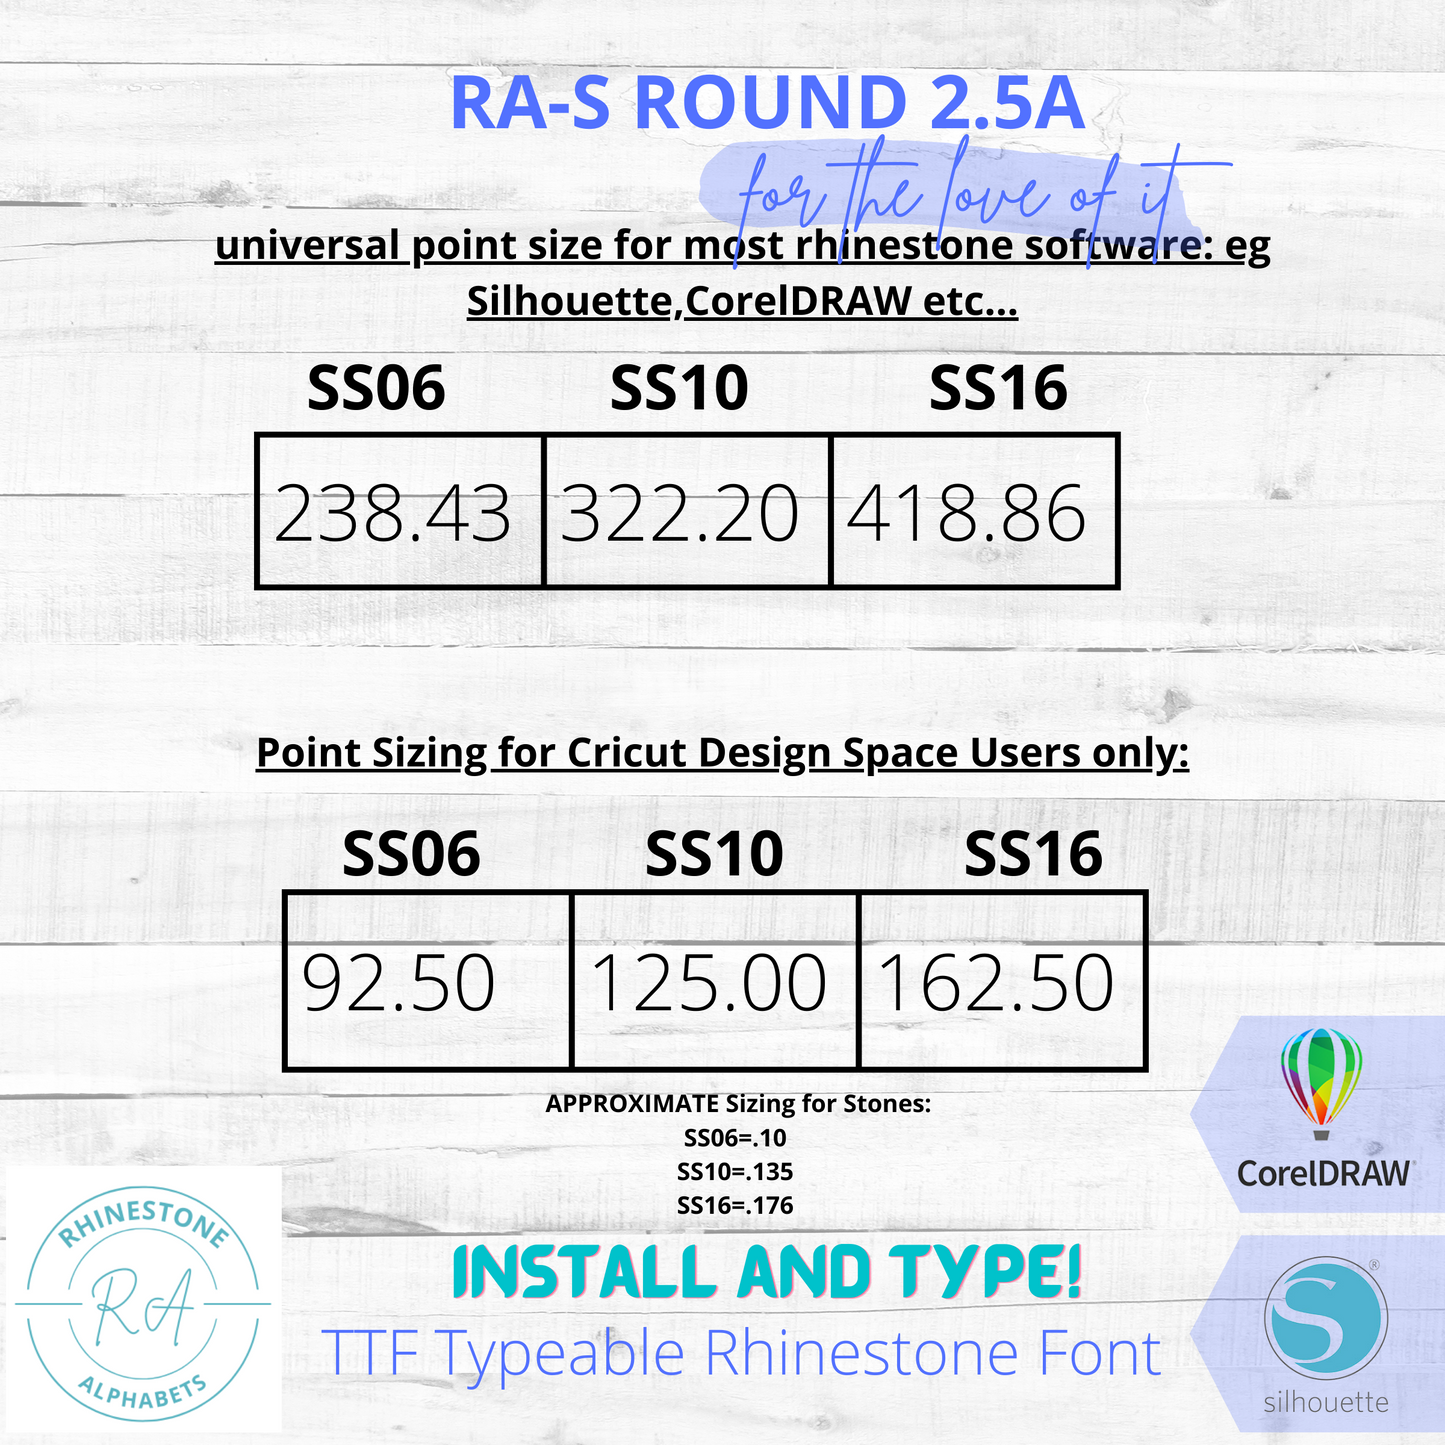 RA-S Round 2.5A